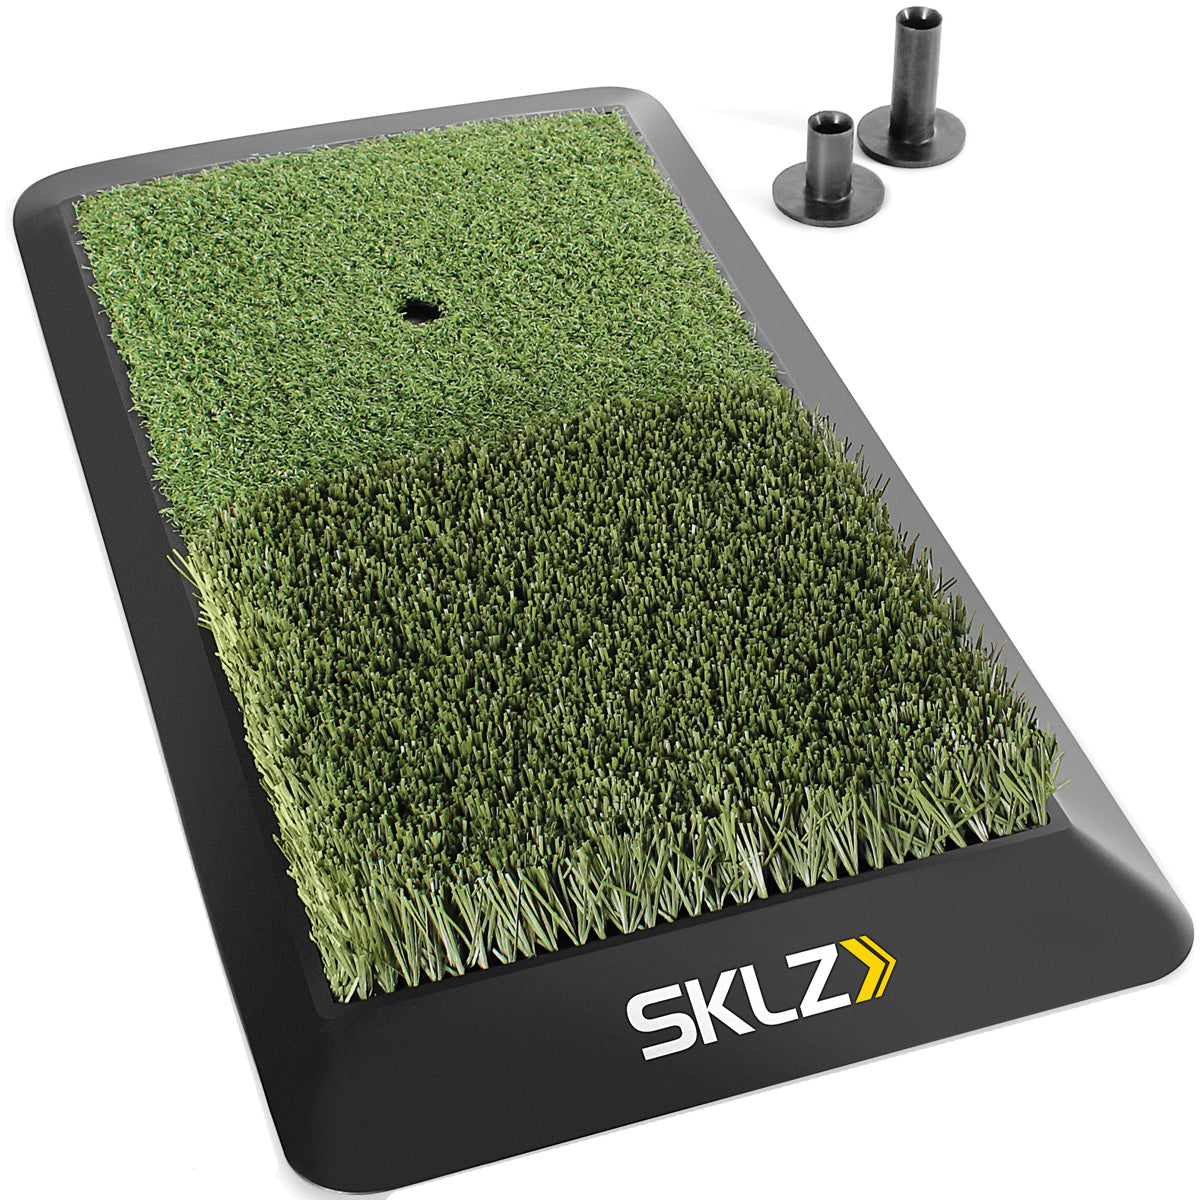 SKLZ Home Golf Driving Range Kit SKLZ